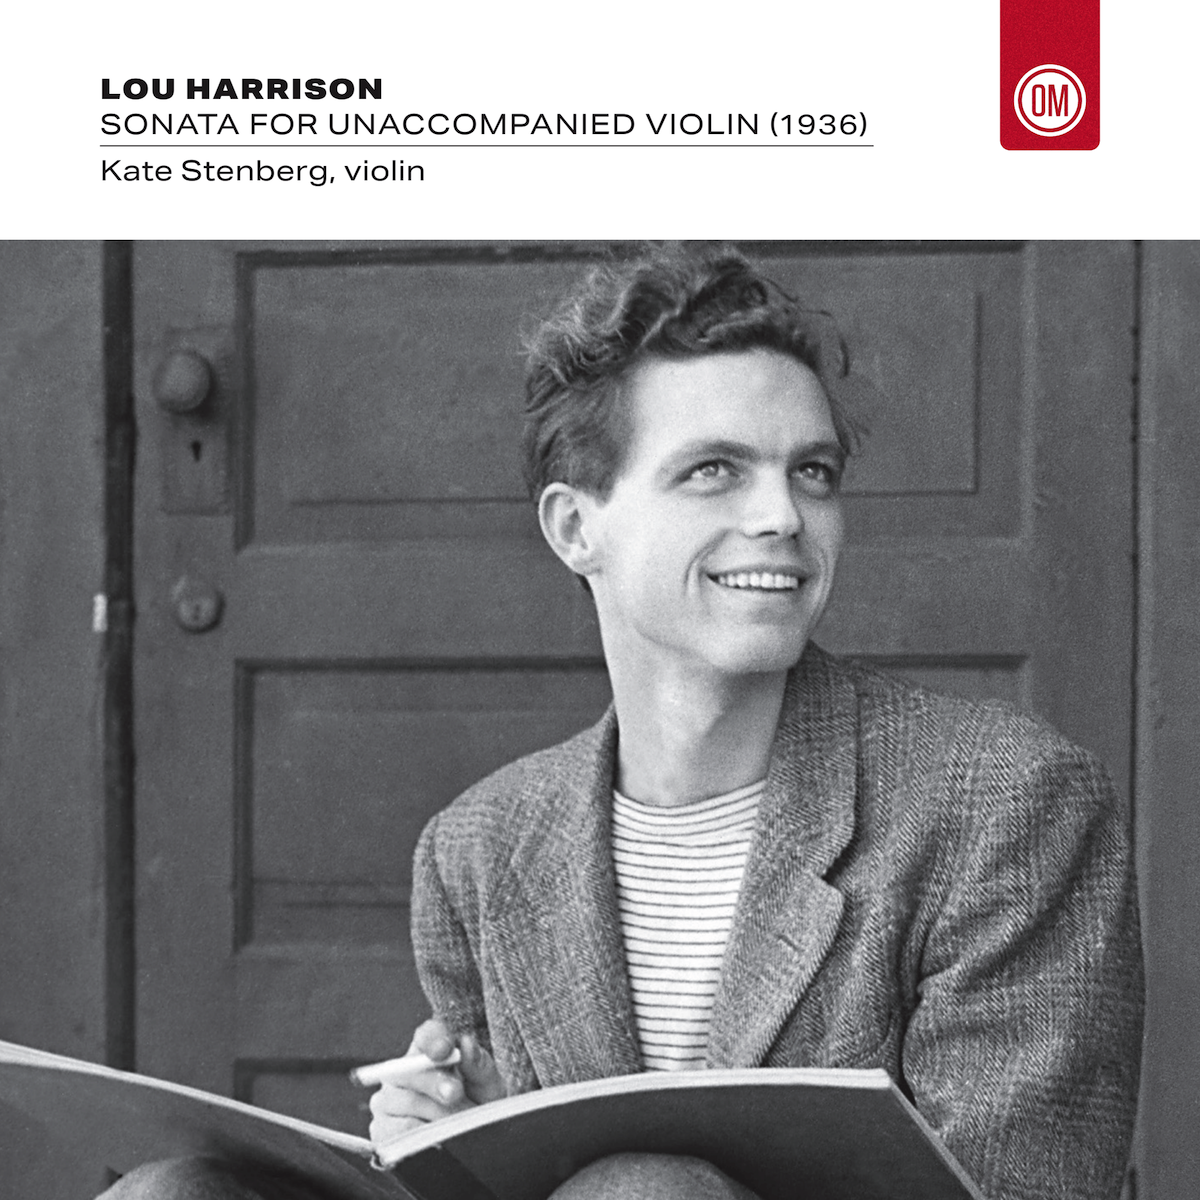 Lou Harrison: Sonata for Unaccompanied Violin